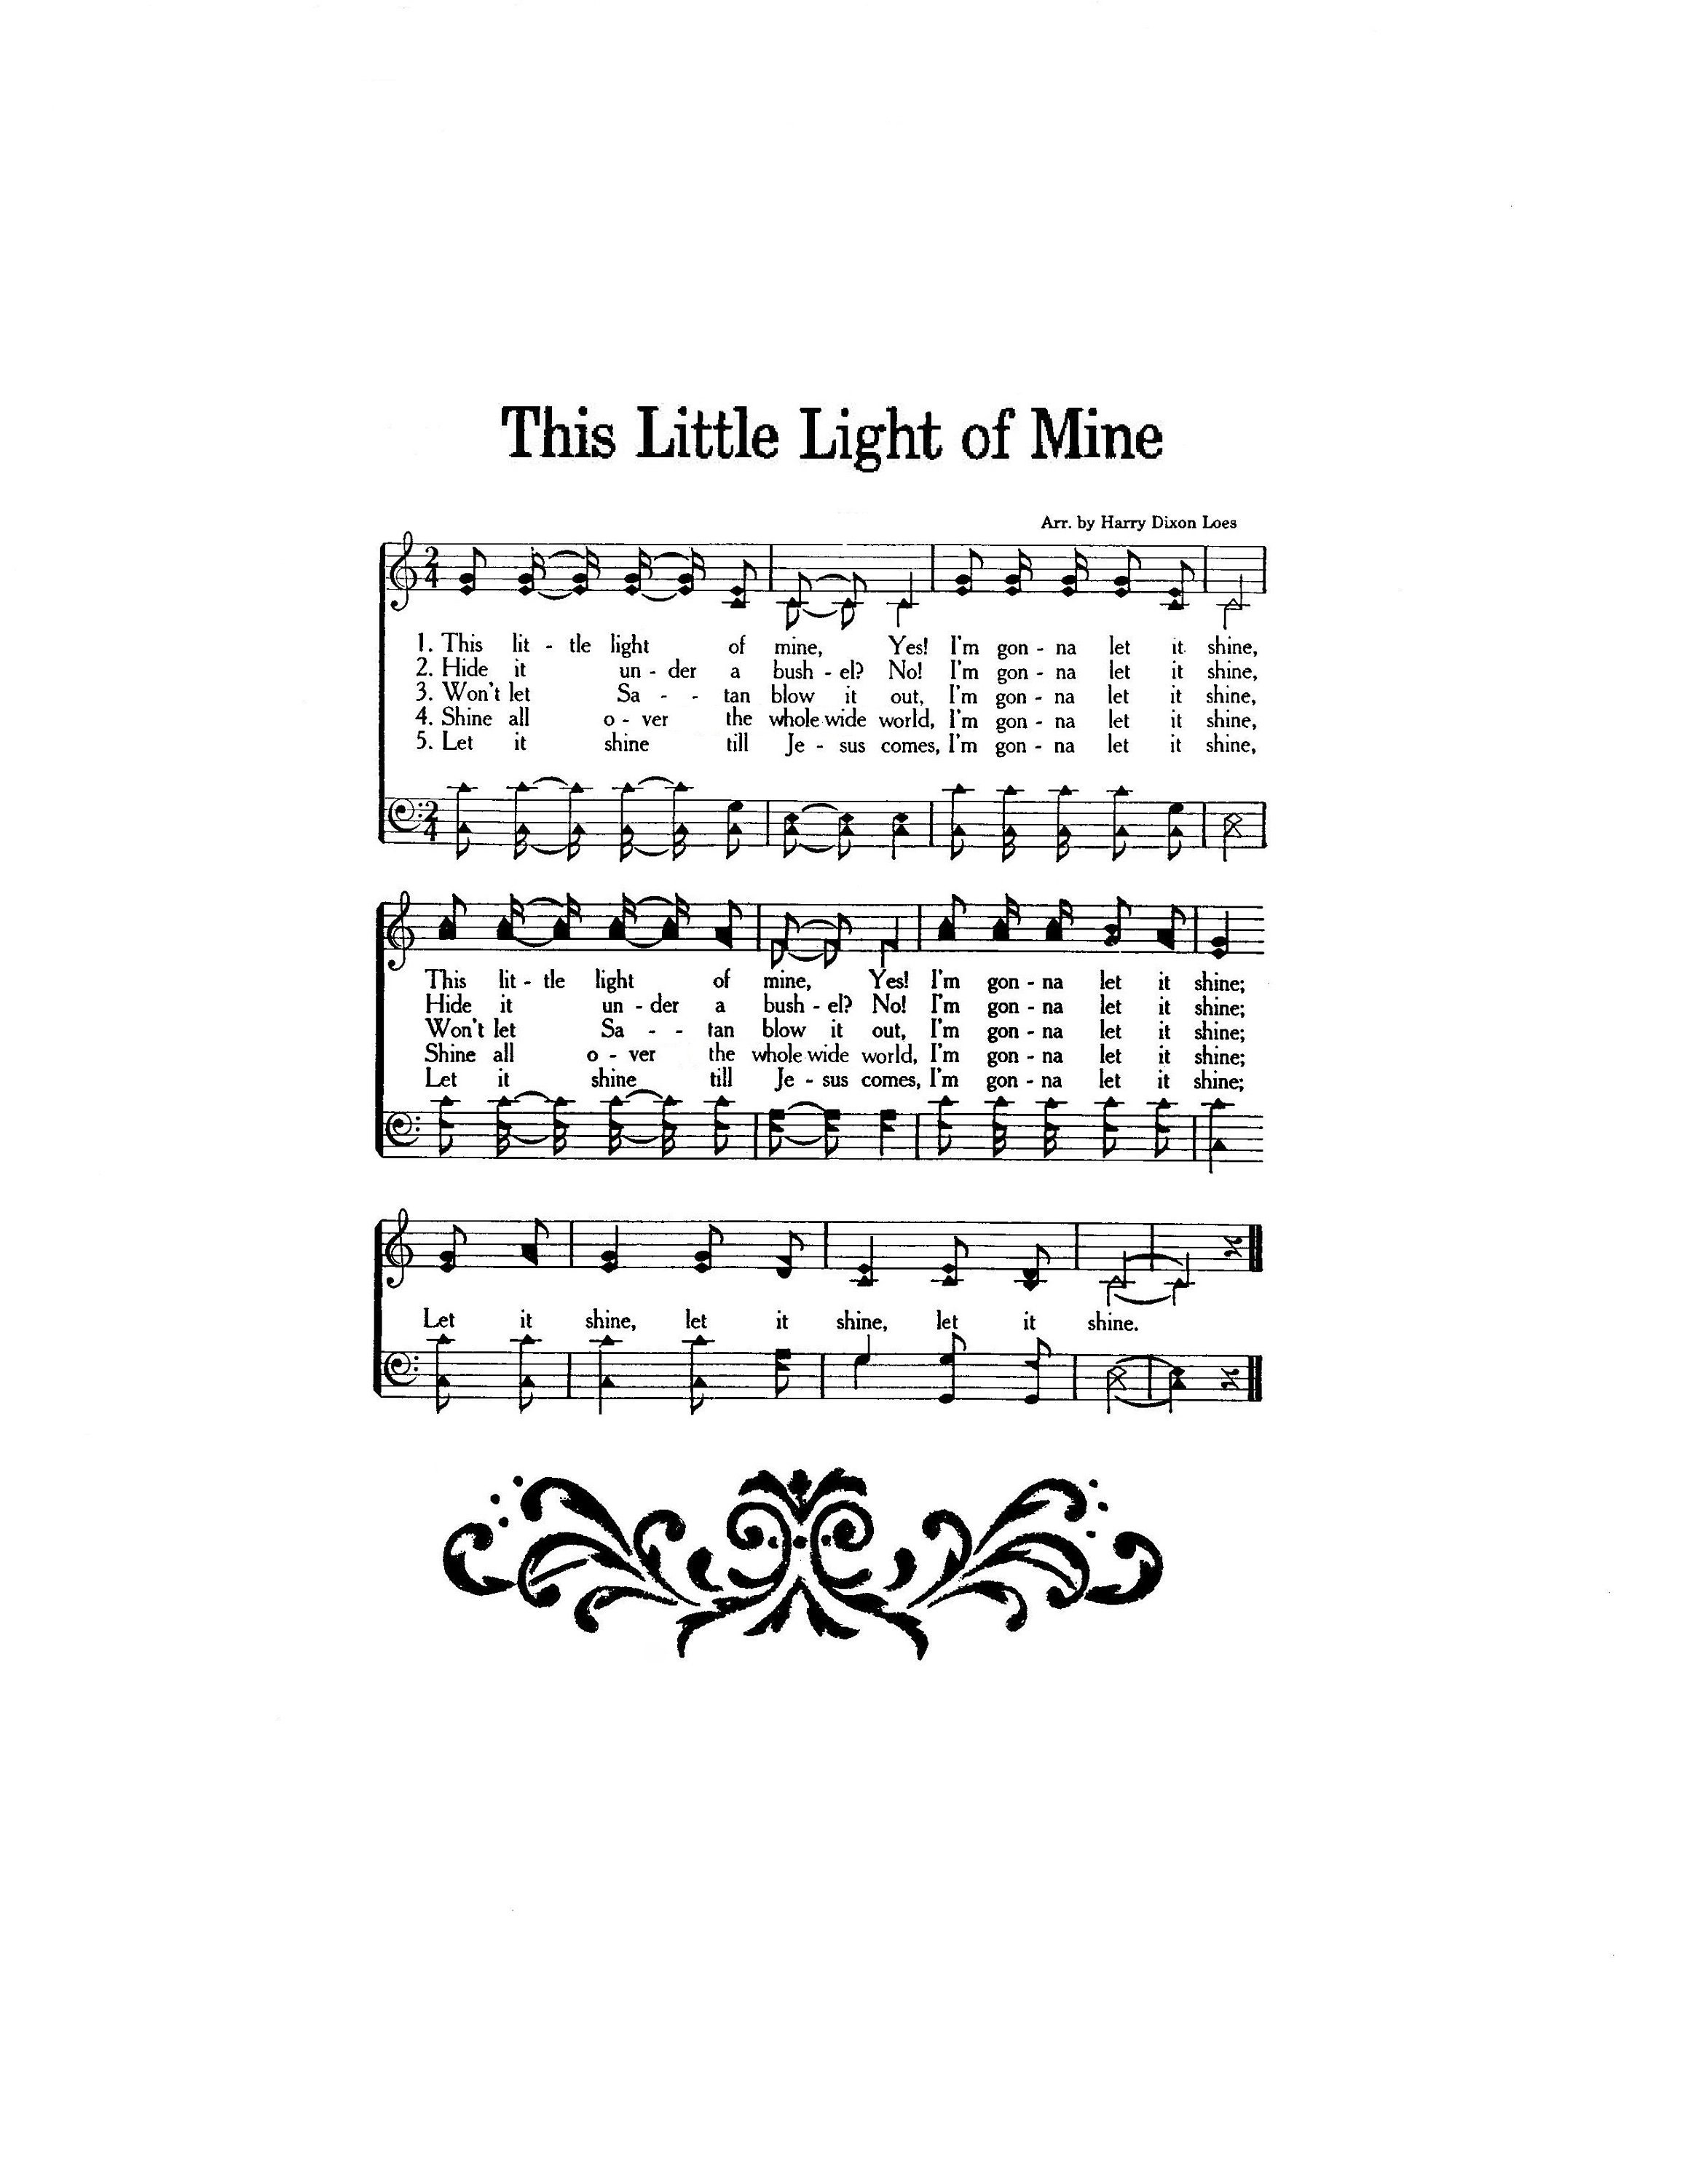 Uberettiget adgang Lodge This Little Light of Mine Hymn Digital Sheet Music Home Decor - Etsy